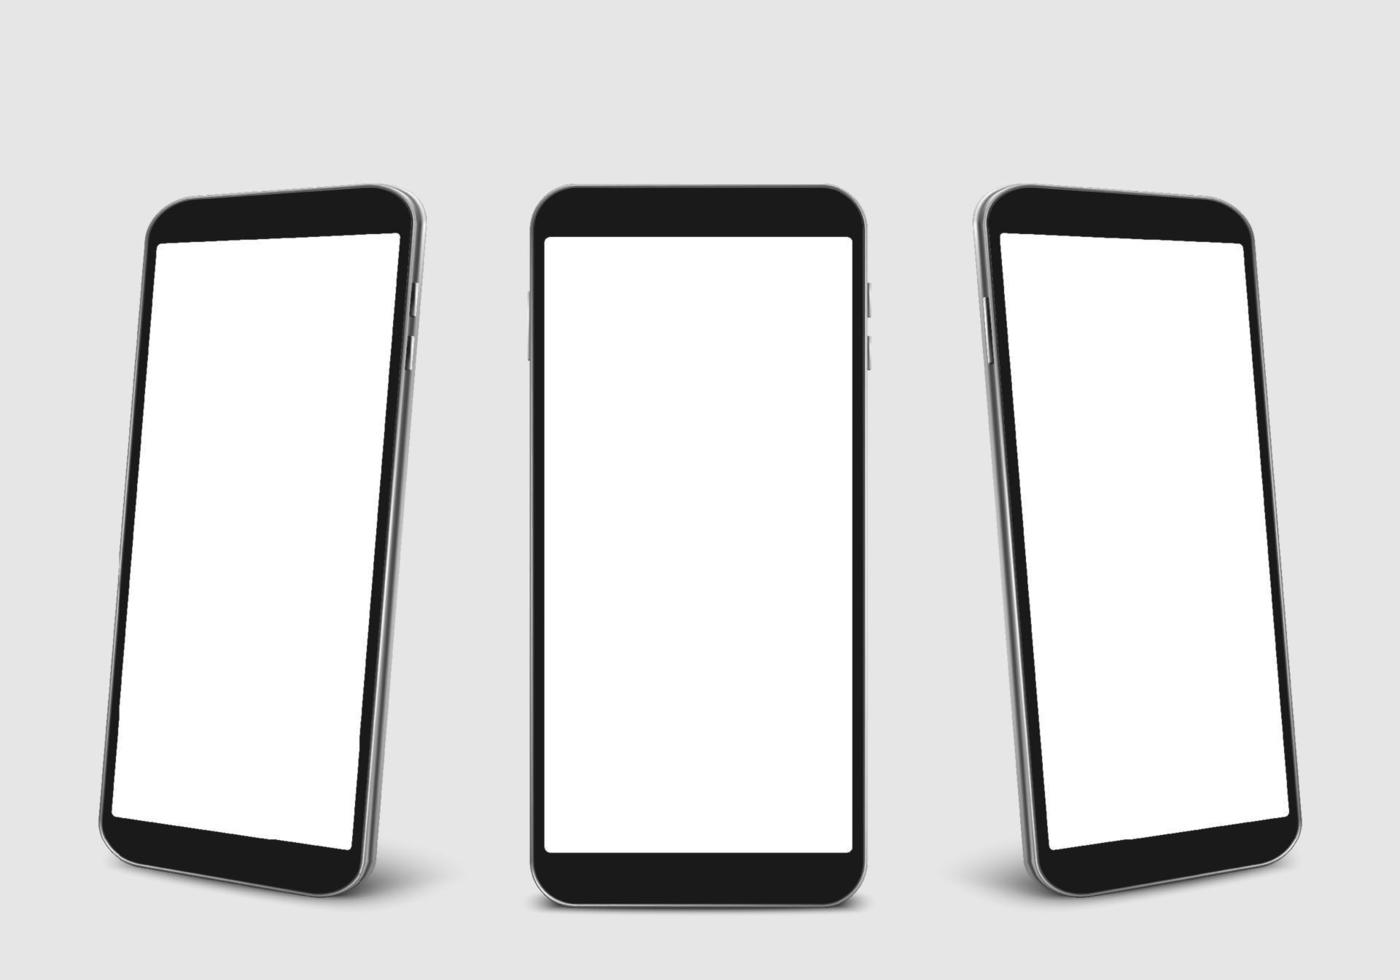 svart smartphone mockup set isolerad på bakgrunden. modern mobiltelefon samling med kopia utrymme. teknik vektor illustration